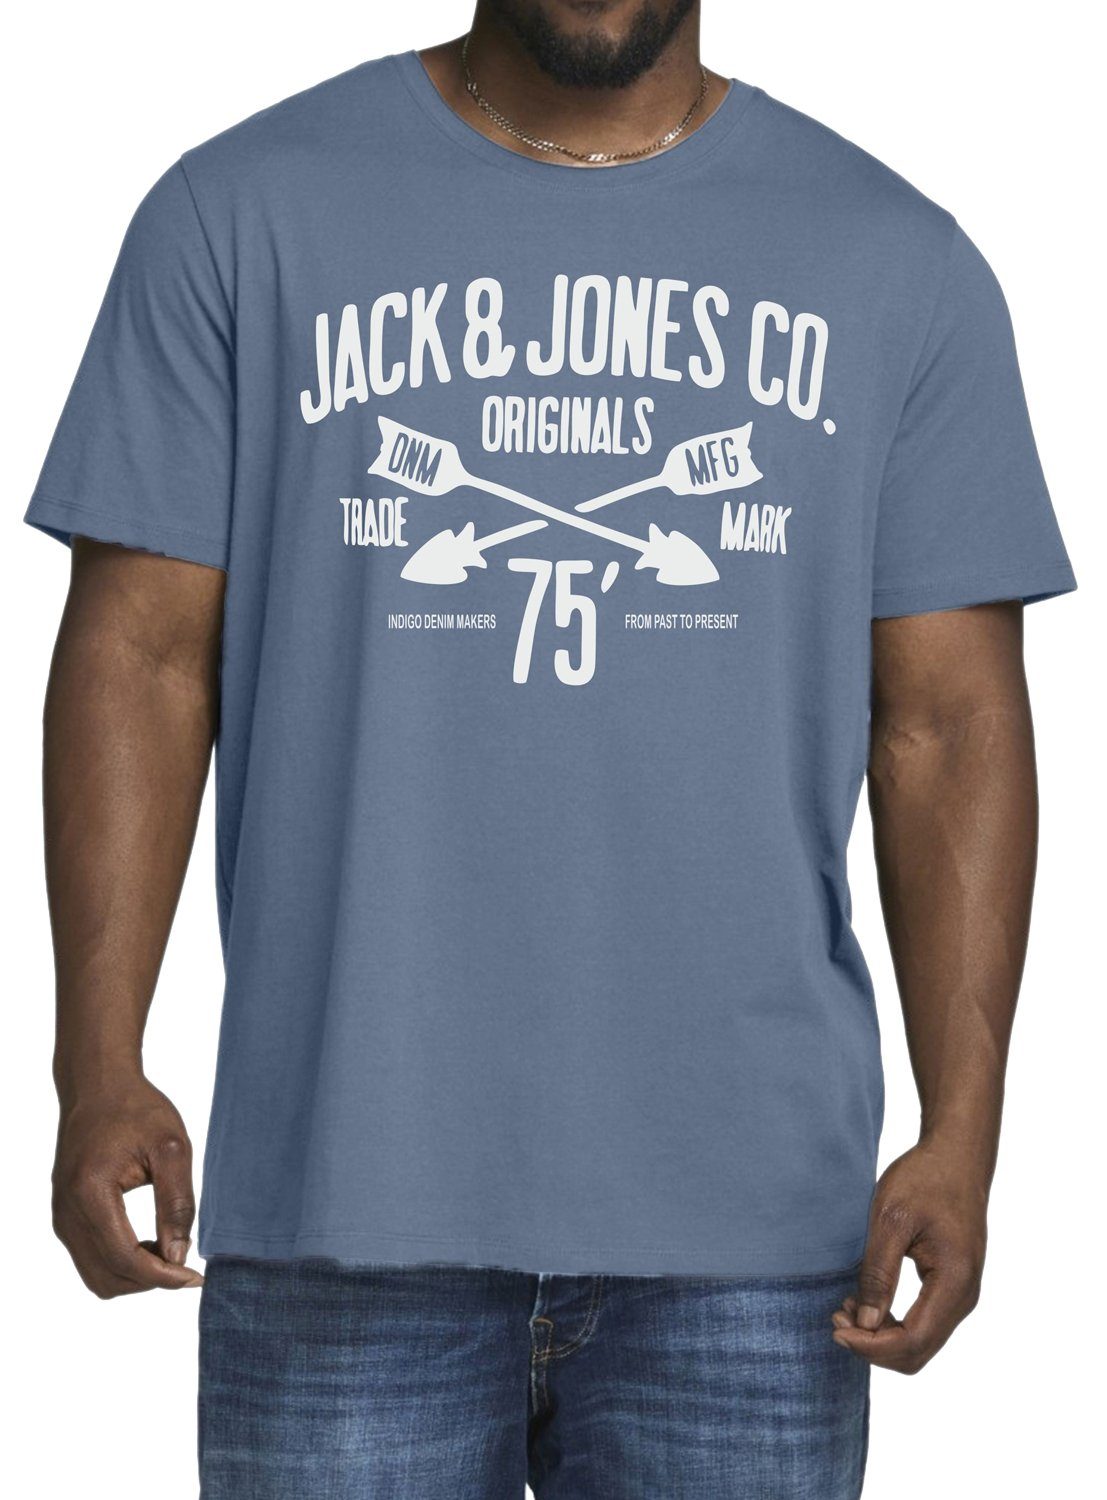 Plus Jones Übergrößen T-Shirt Print-Shirt & Size Jack Big 4 OPT